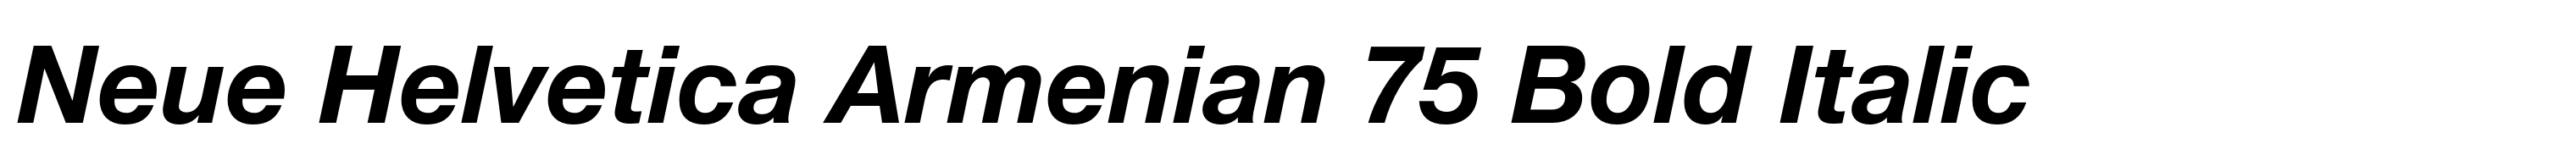 Neue Helvetica Armenian 75 Bold Italic